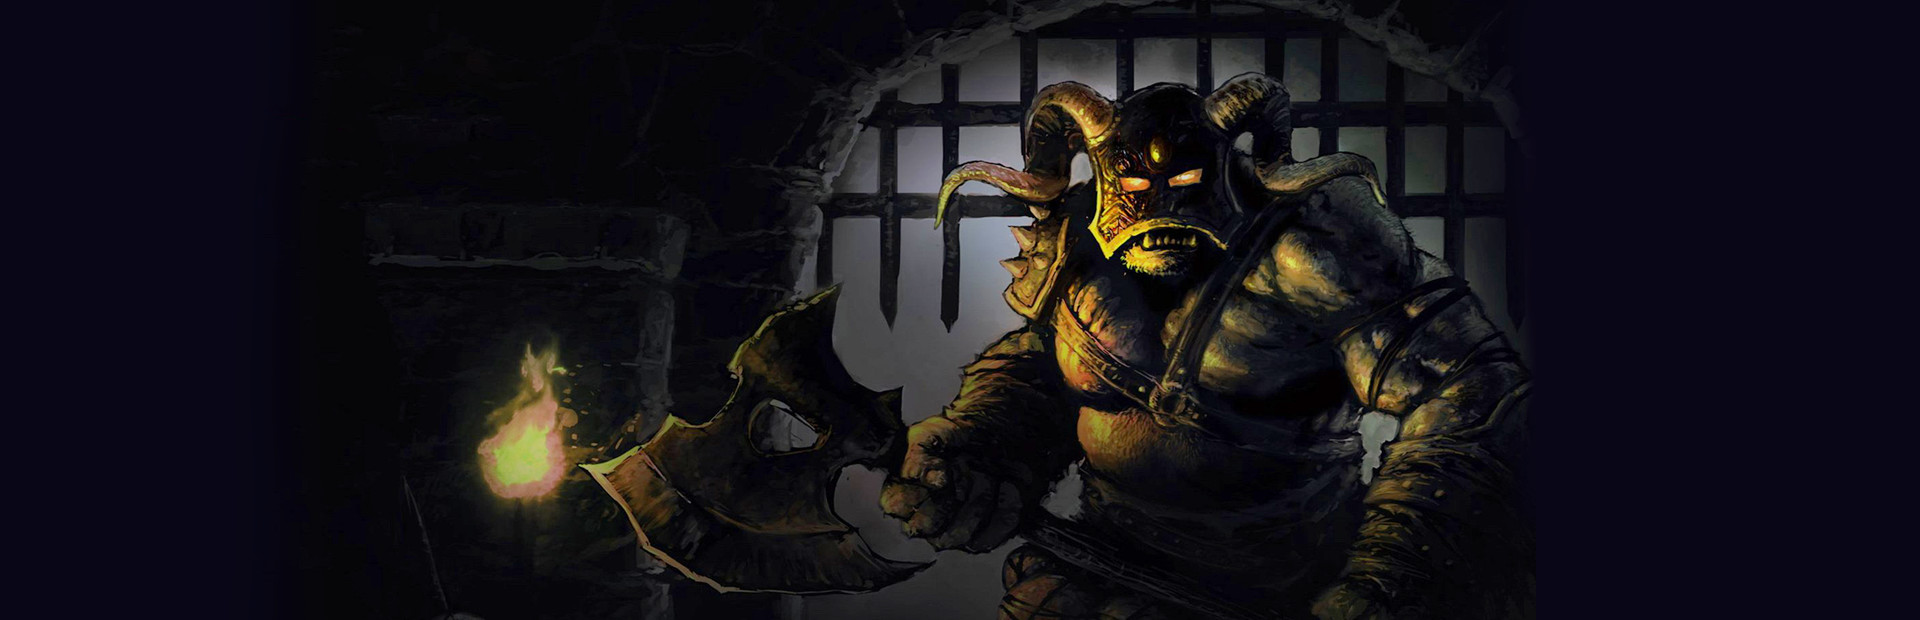 Baldur's Gate: Enhanced Edition cover image